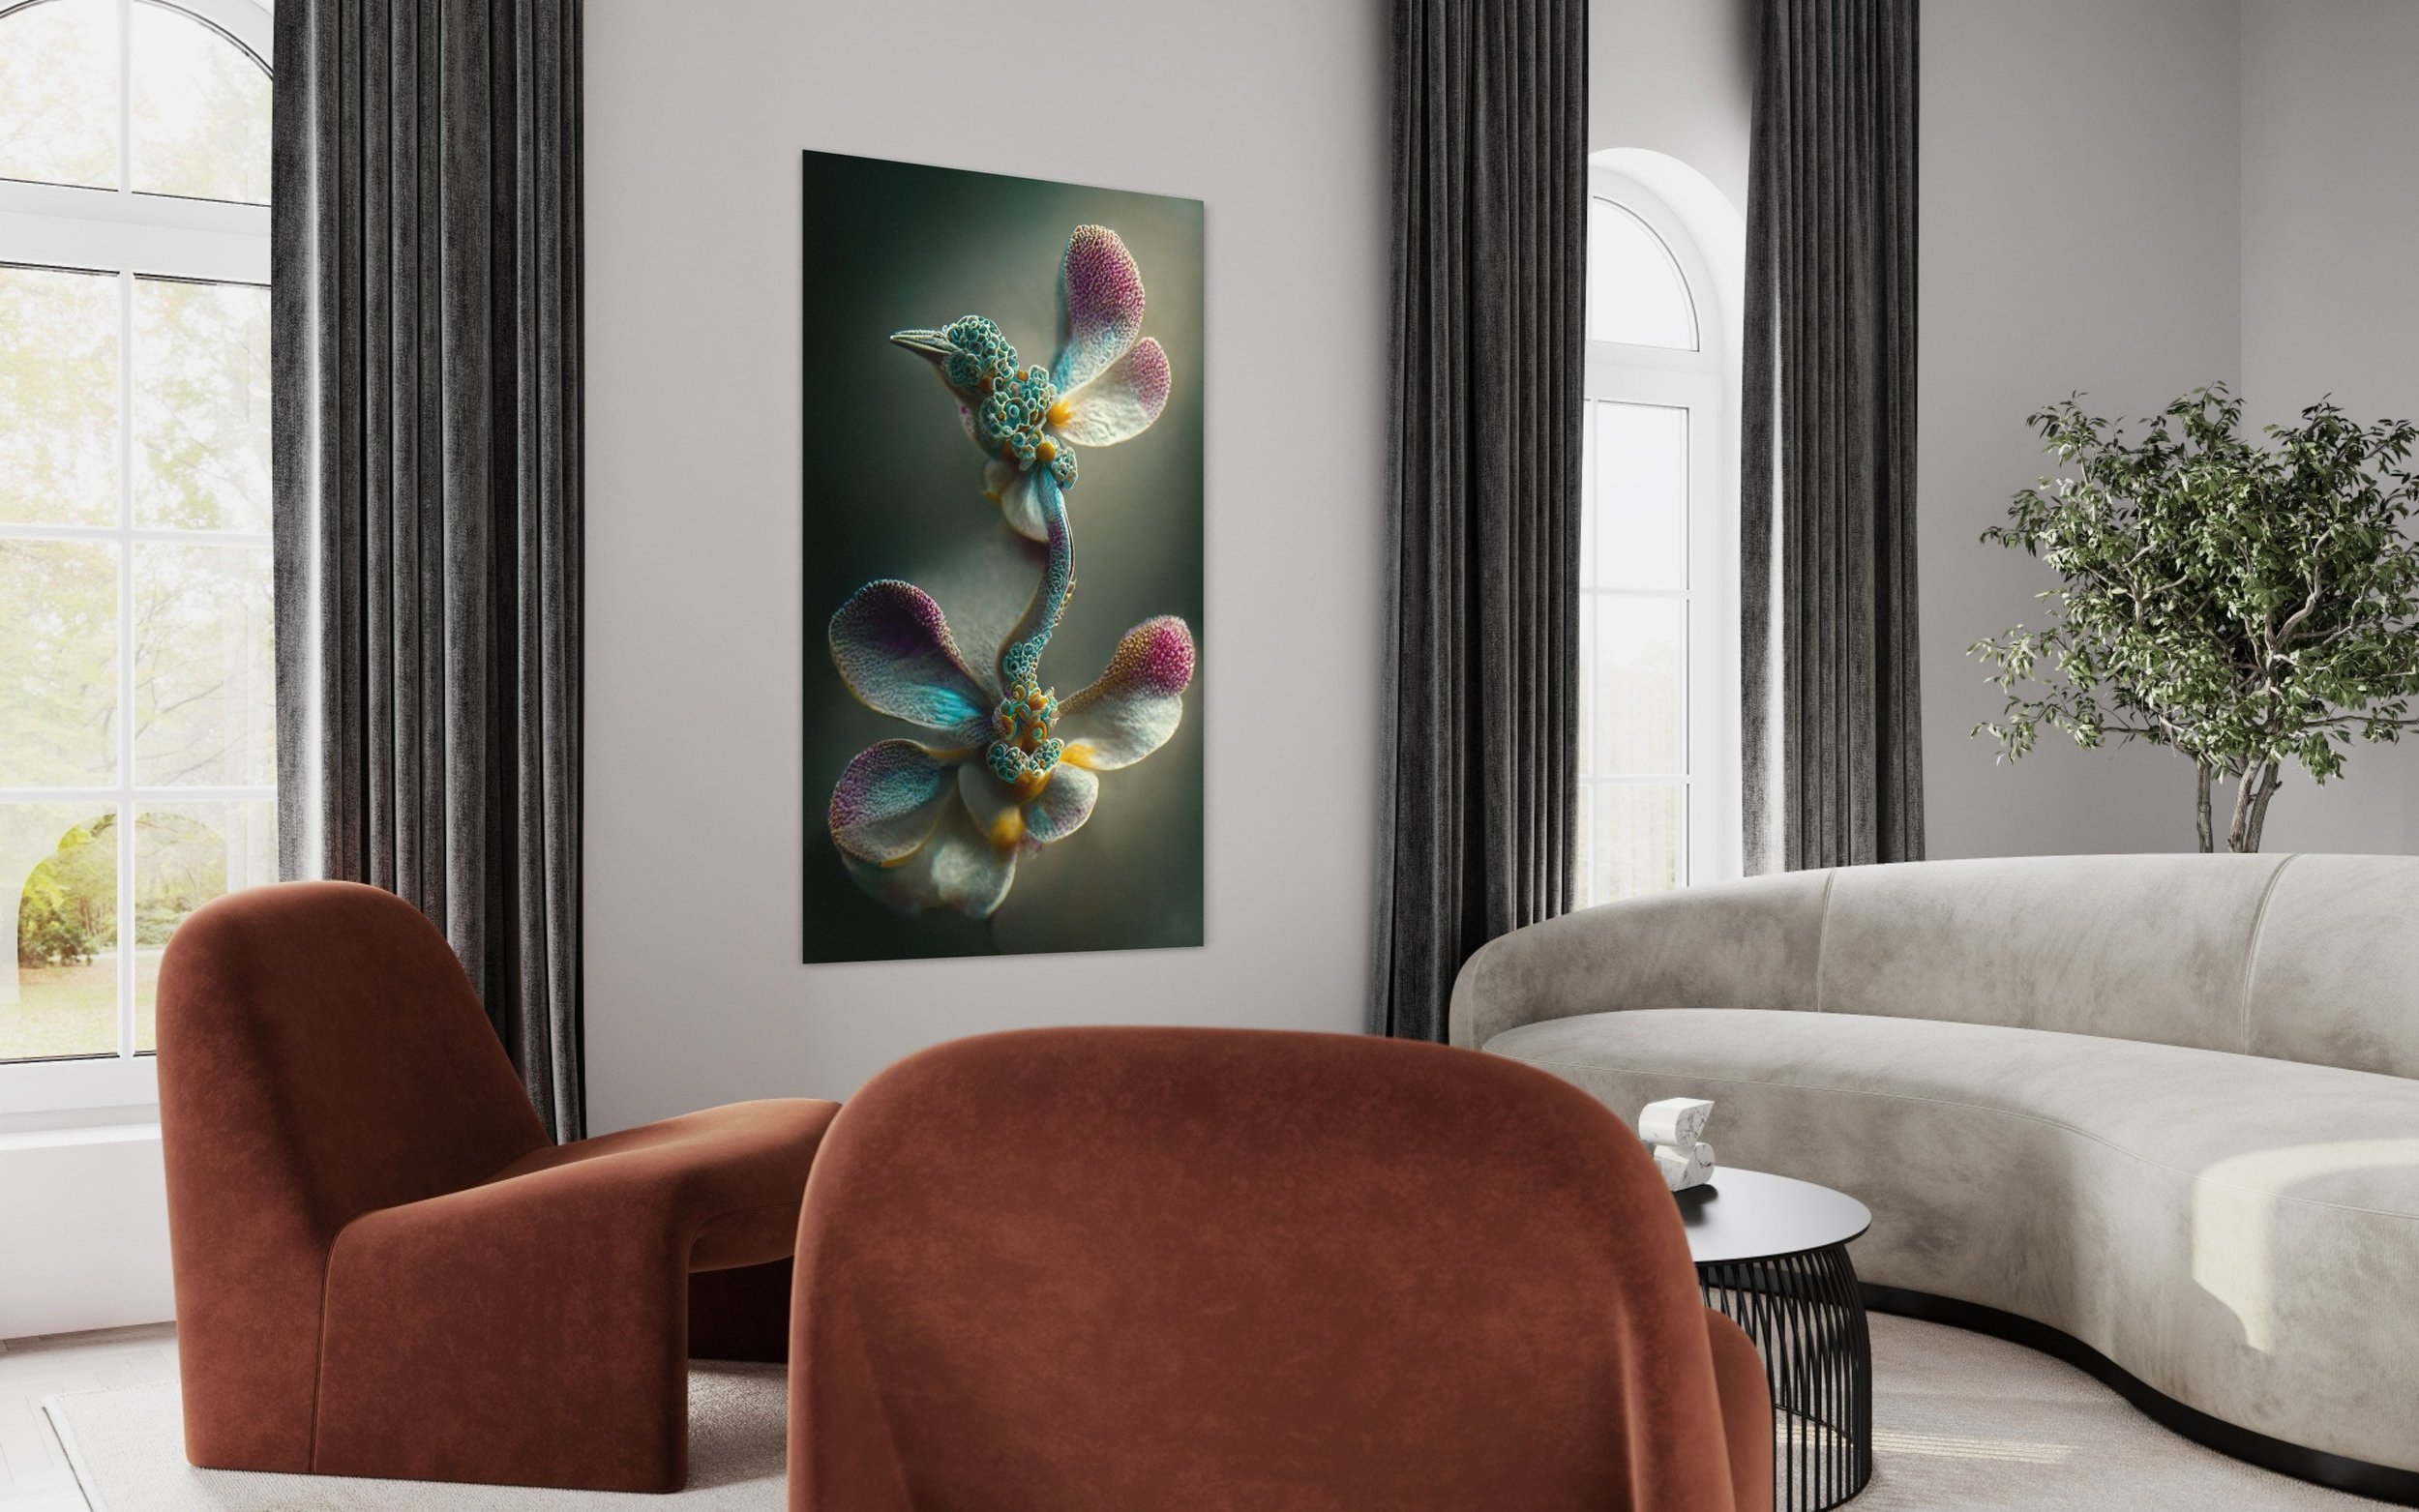 Hummingbird | Frangipani Flower Coral Reef Digital Painting Art Canvas Prints Metal Abstract Wall